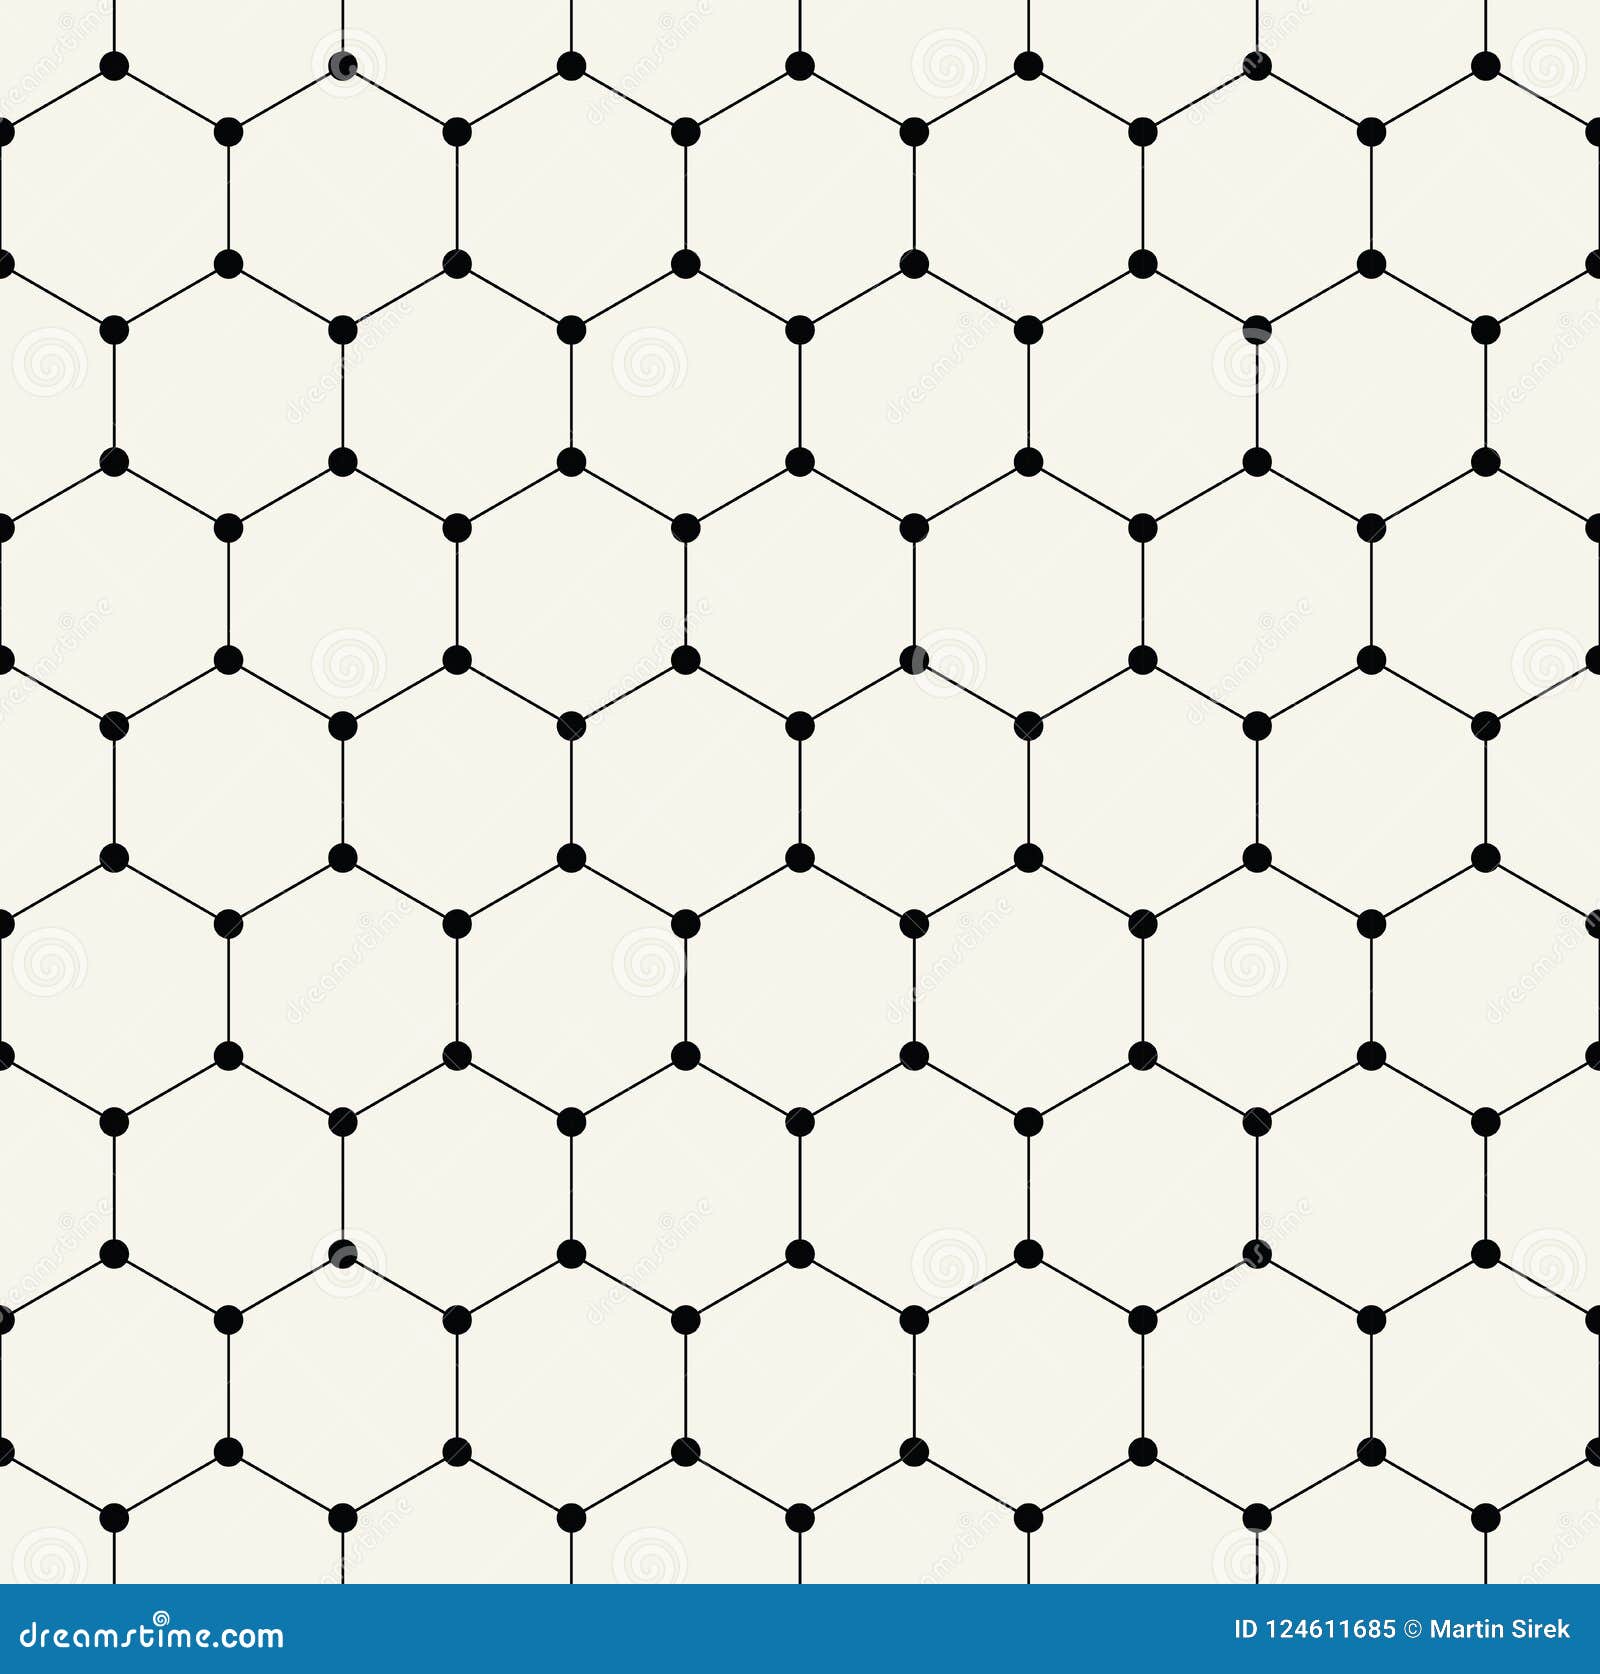 Geometric Hexagon Minimal Grid Graphic Pattern Stock Vector